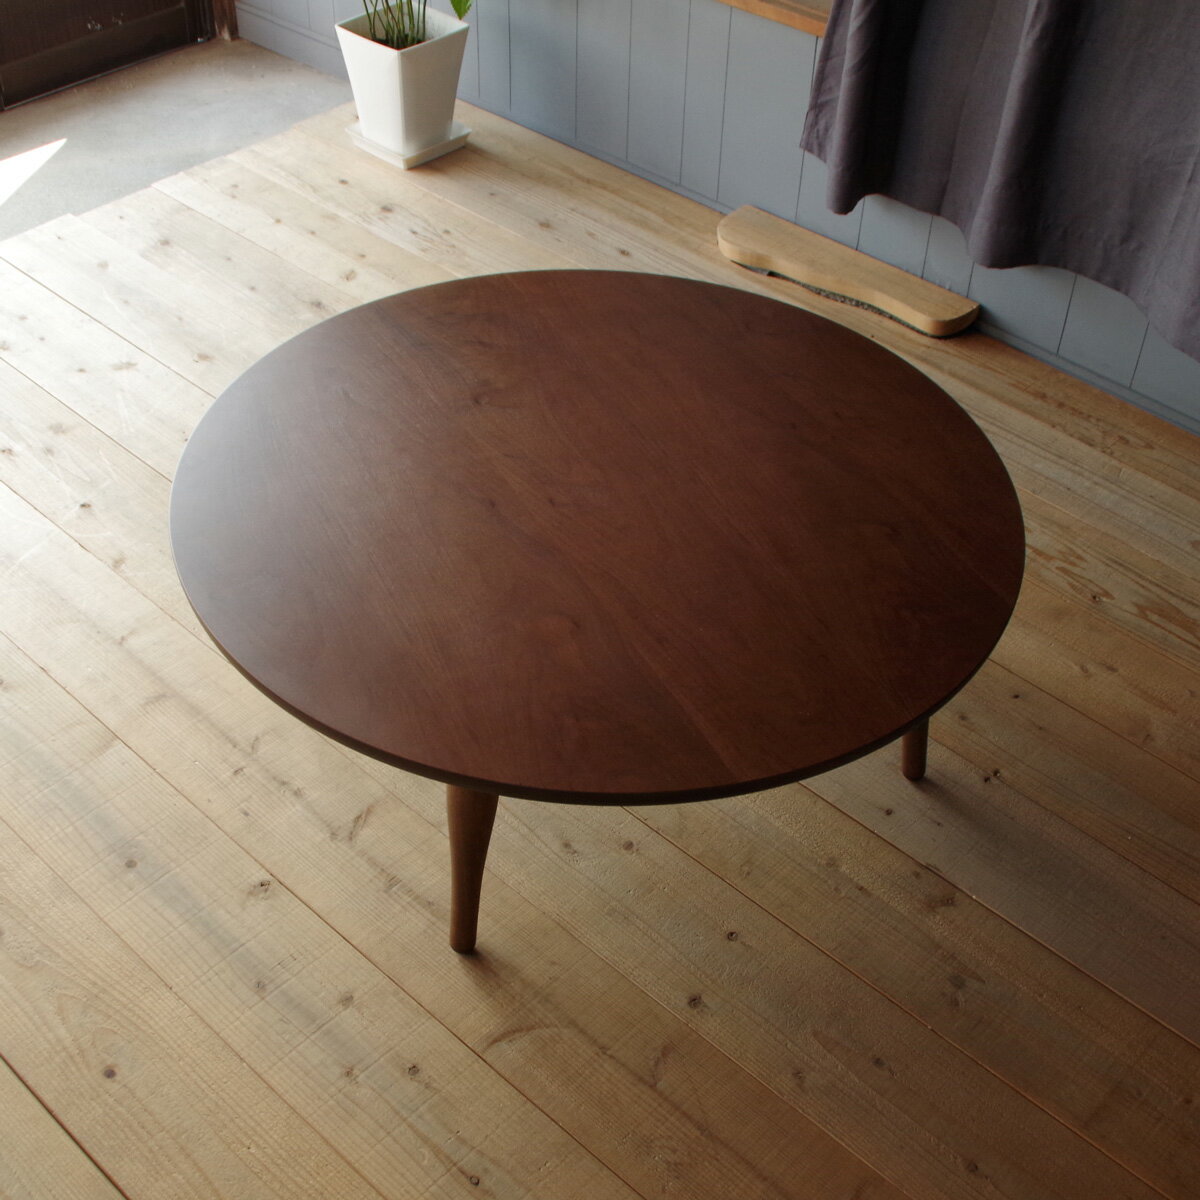 UP座卓 円形 テーブル 105ナラ|ウォールナット|北欧|和風|モダン|シンプル|デザイン||おしゃれ|かわいい||円卓|座卓|ちゃぶ台||ローテーブル|センターテーブル||日本製|国産|